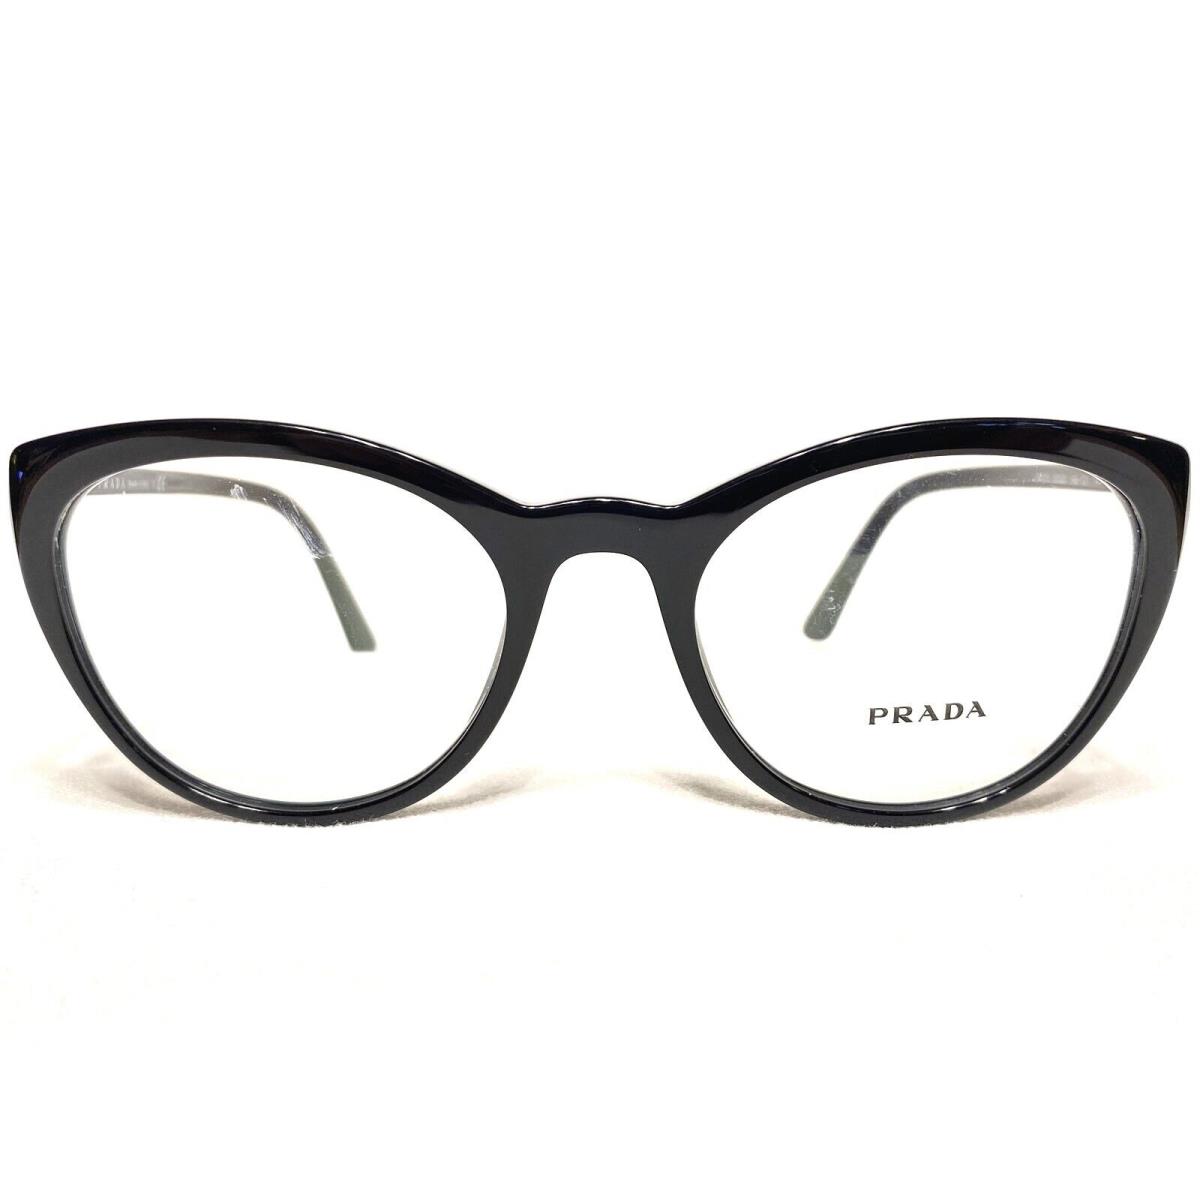 Prada VPR07V 1AB-1O1 Womens Black Round Designer Eyeglasses Frames 53/20 145 - Black, Frame: Black, Manufacturer: 1AB-1O1